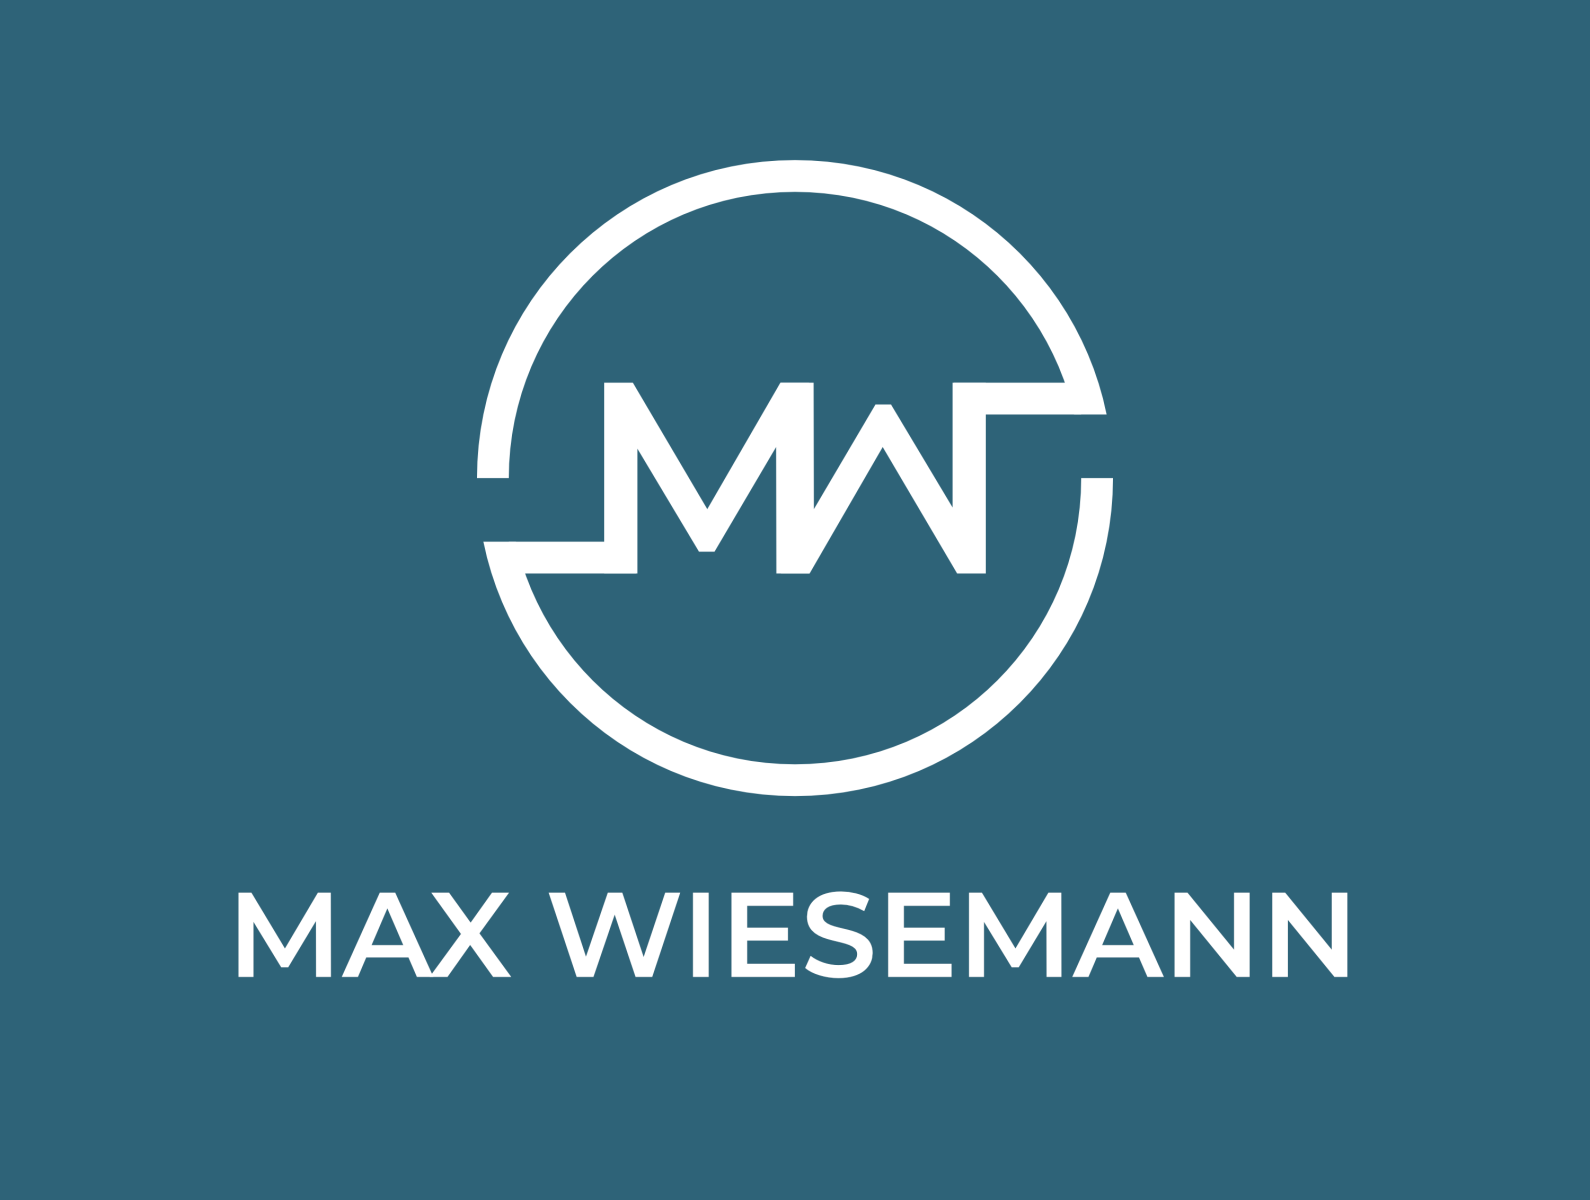 Max Wiesemann Logo by Alexander Spallek on Dribbble